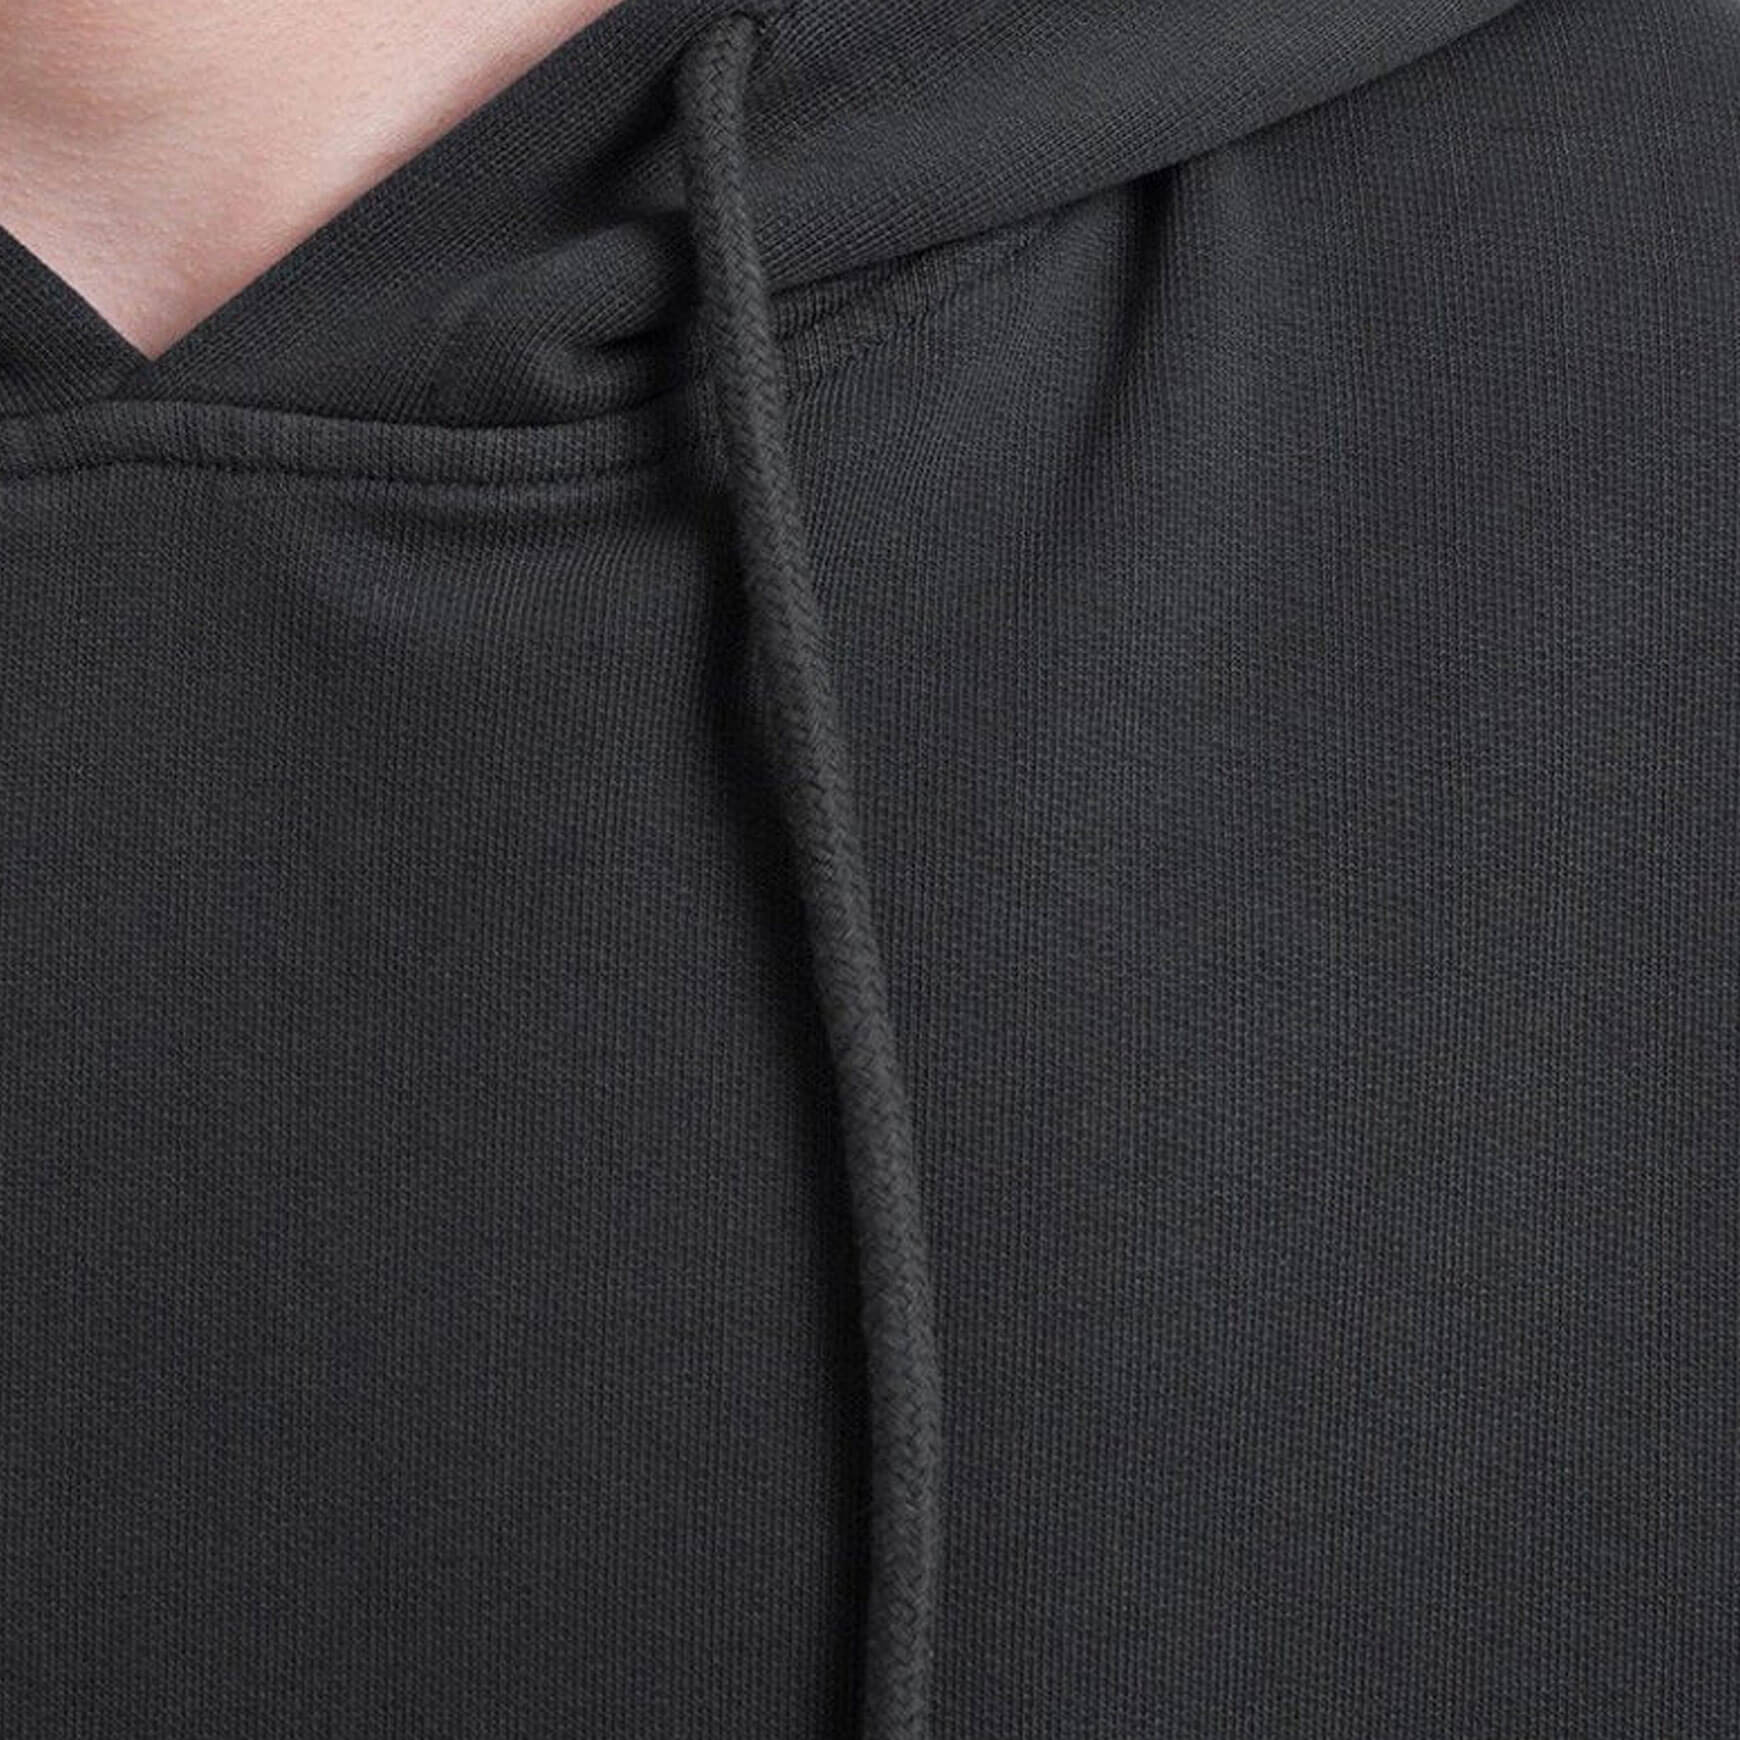 410GSM Hooded Sweatshirt Black Wash